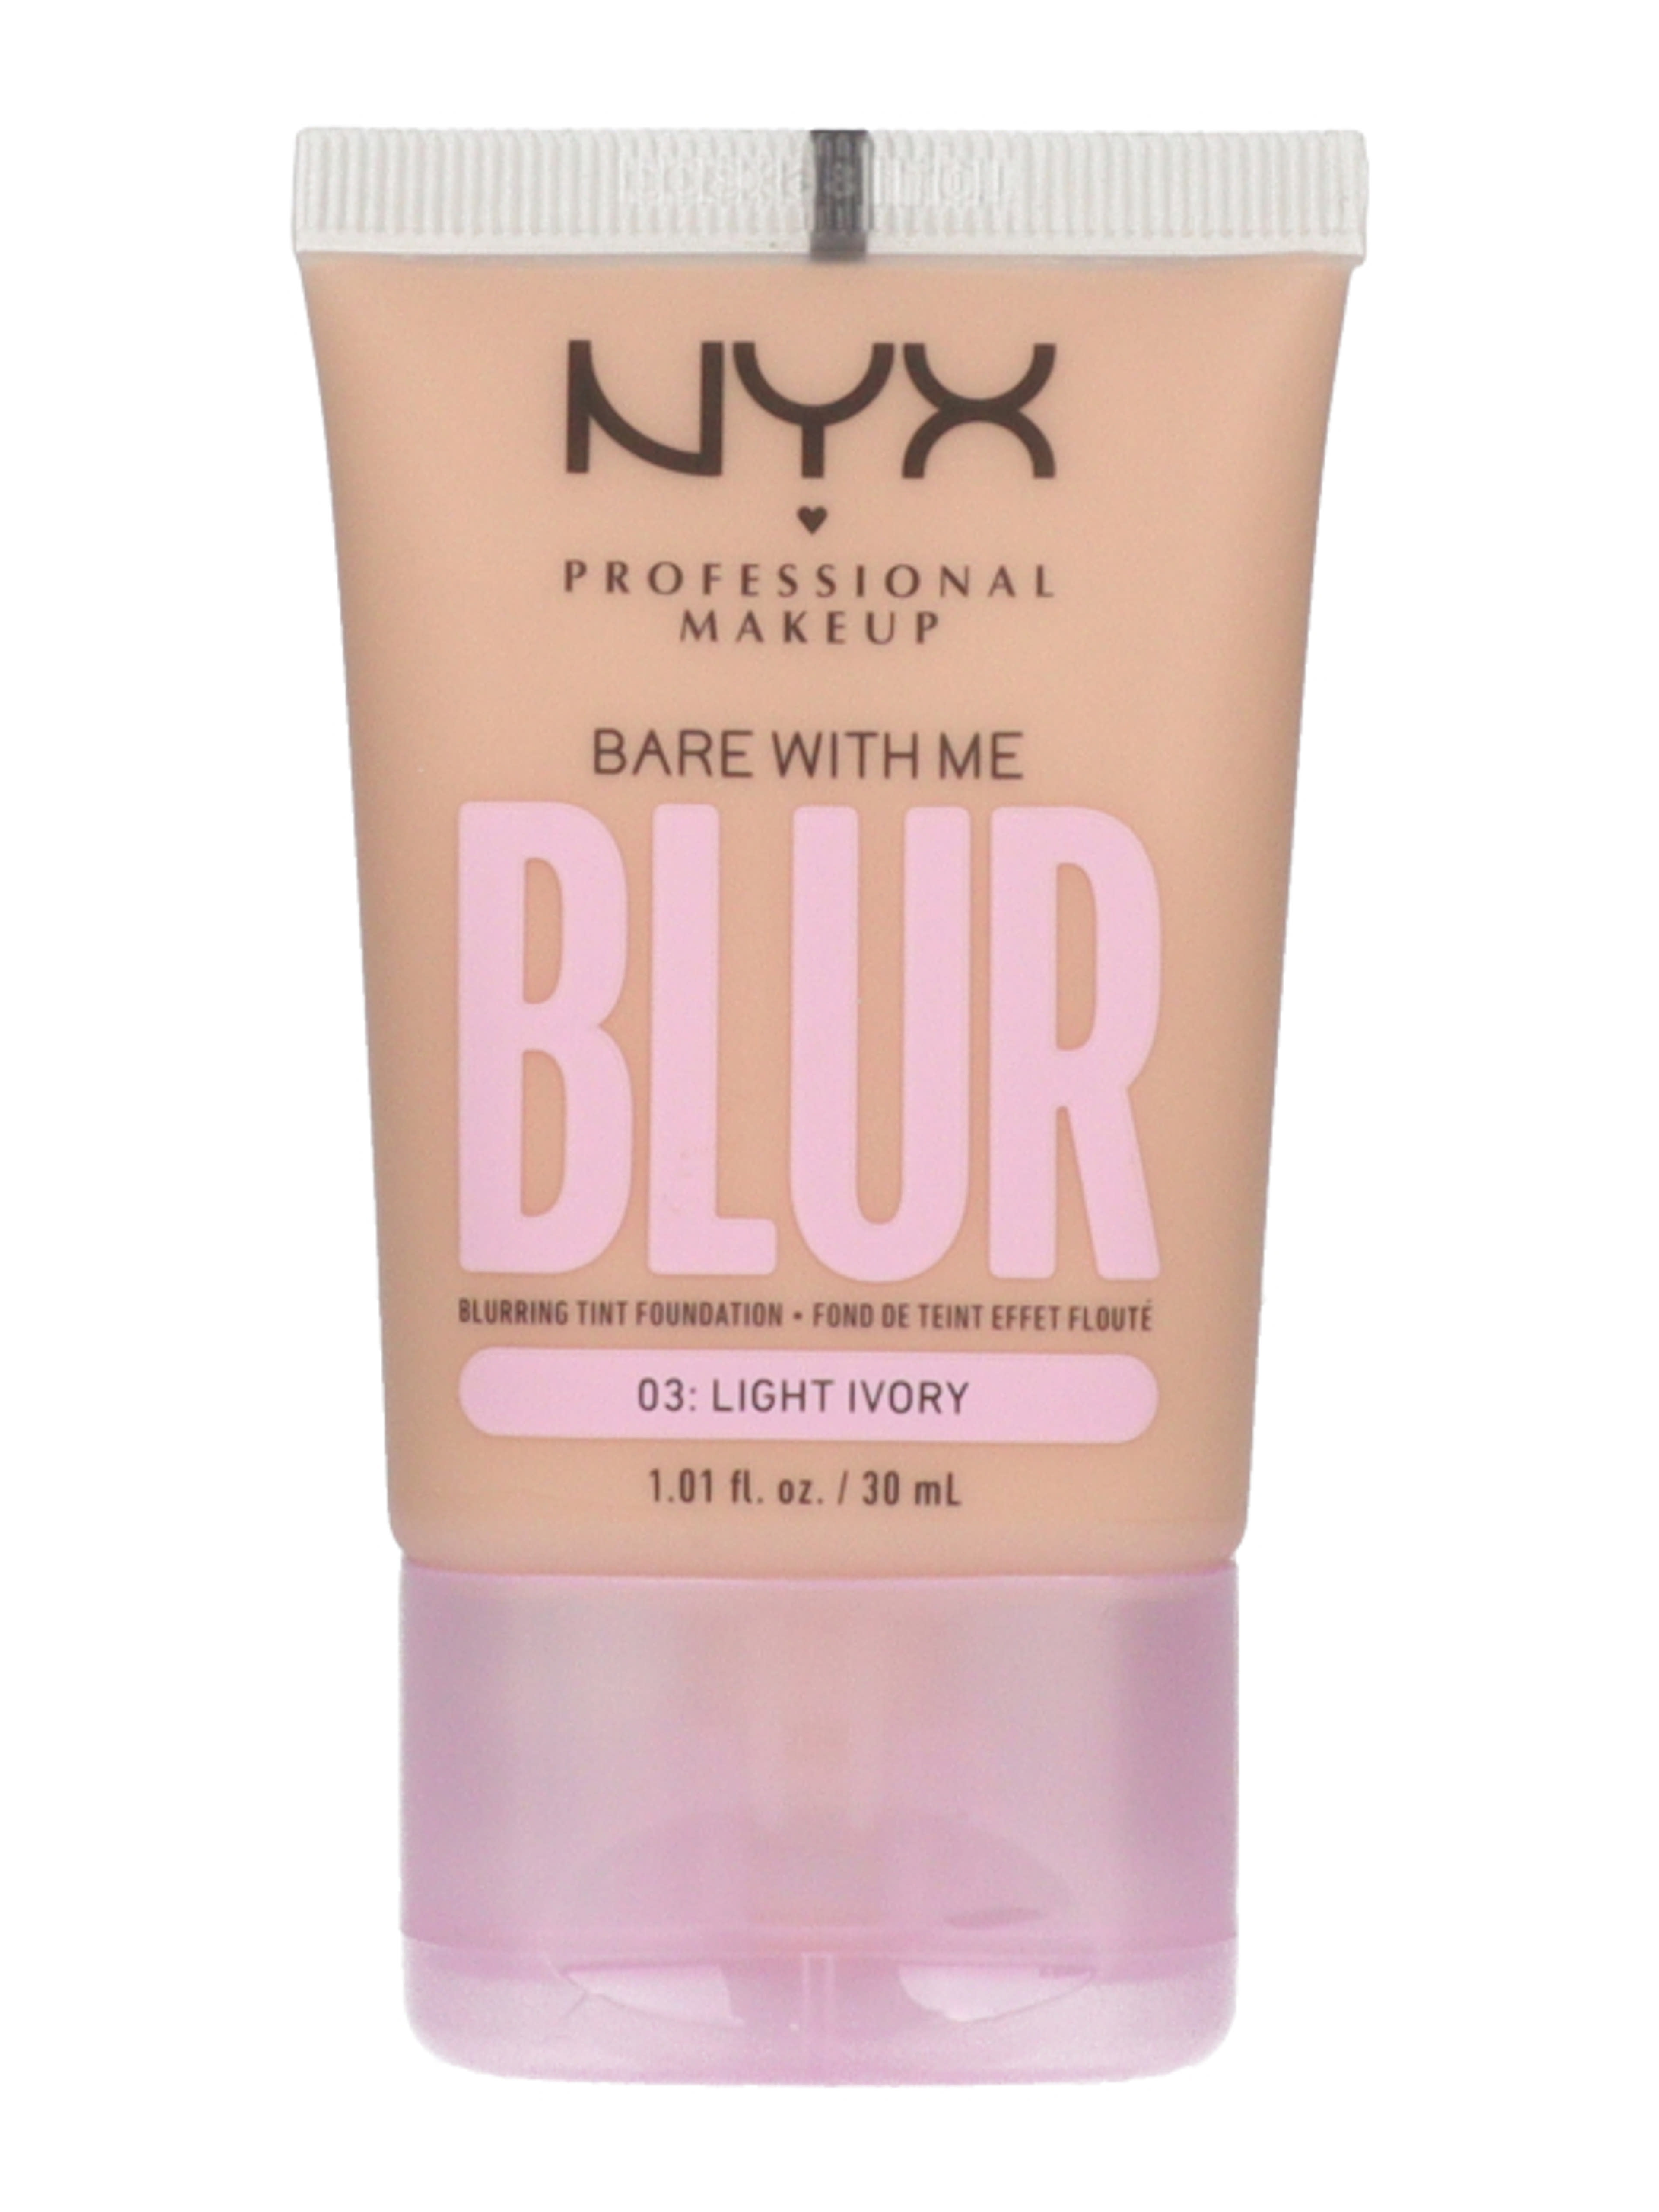 NYX Professional Makeup Bare With Me Blur alapozó /light ivory - 1 db-2